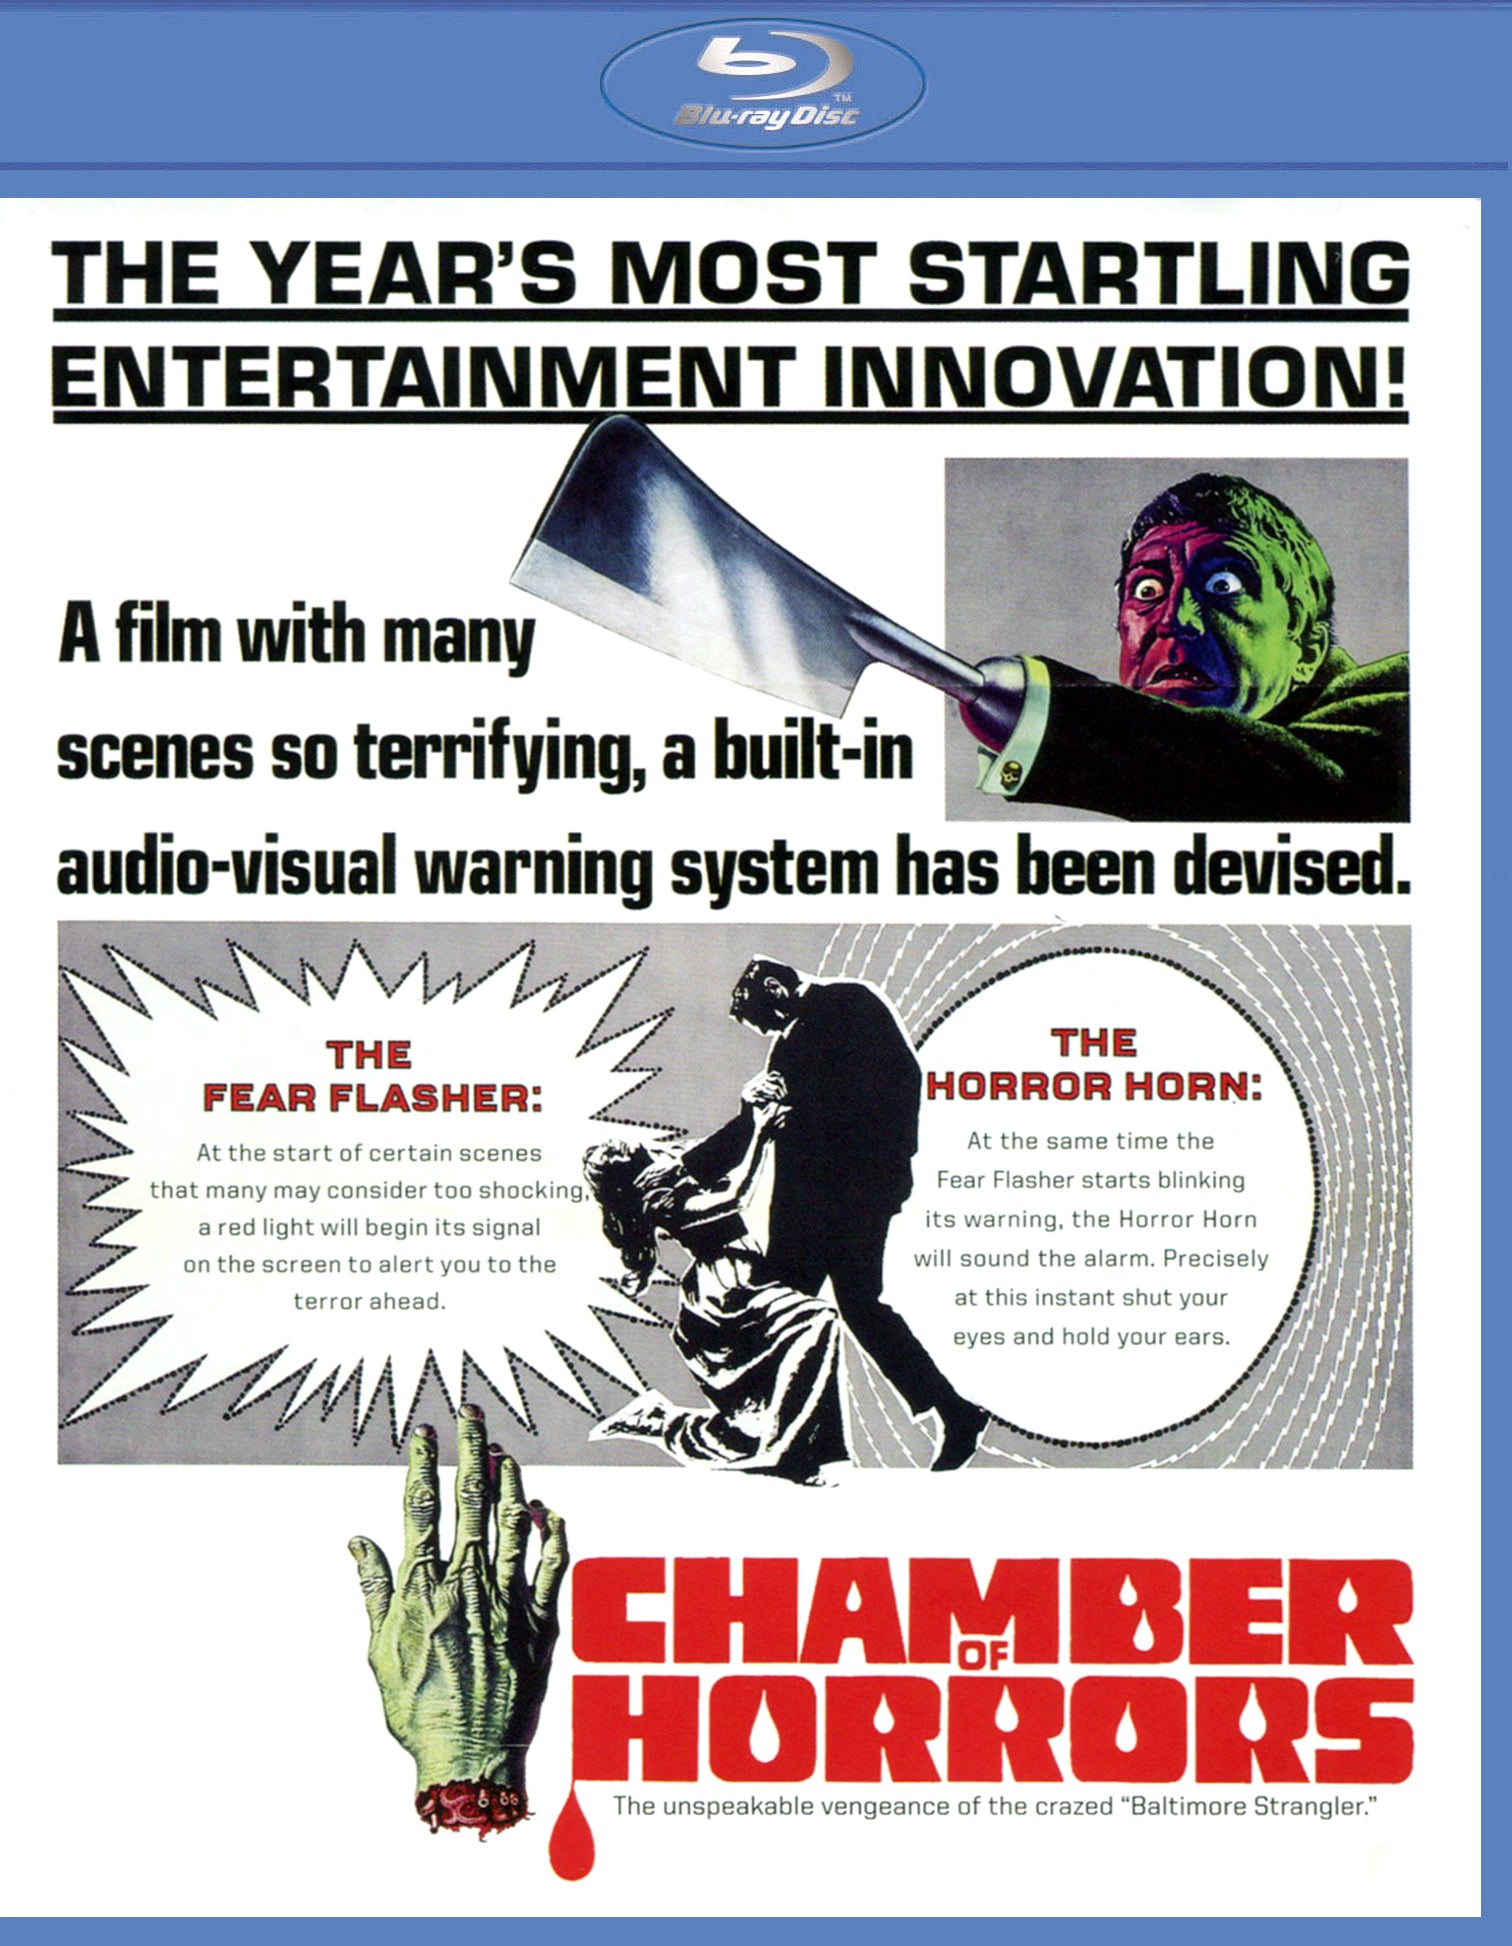 Chamber of Horrors [Blu-ray] cover art